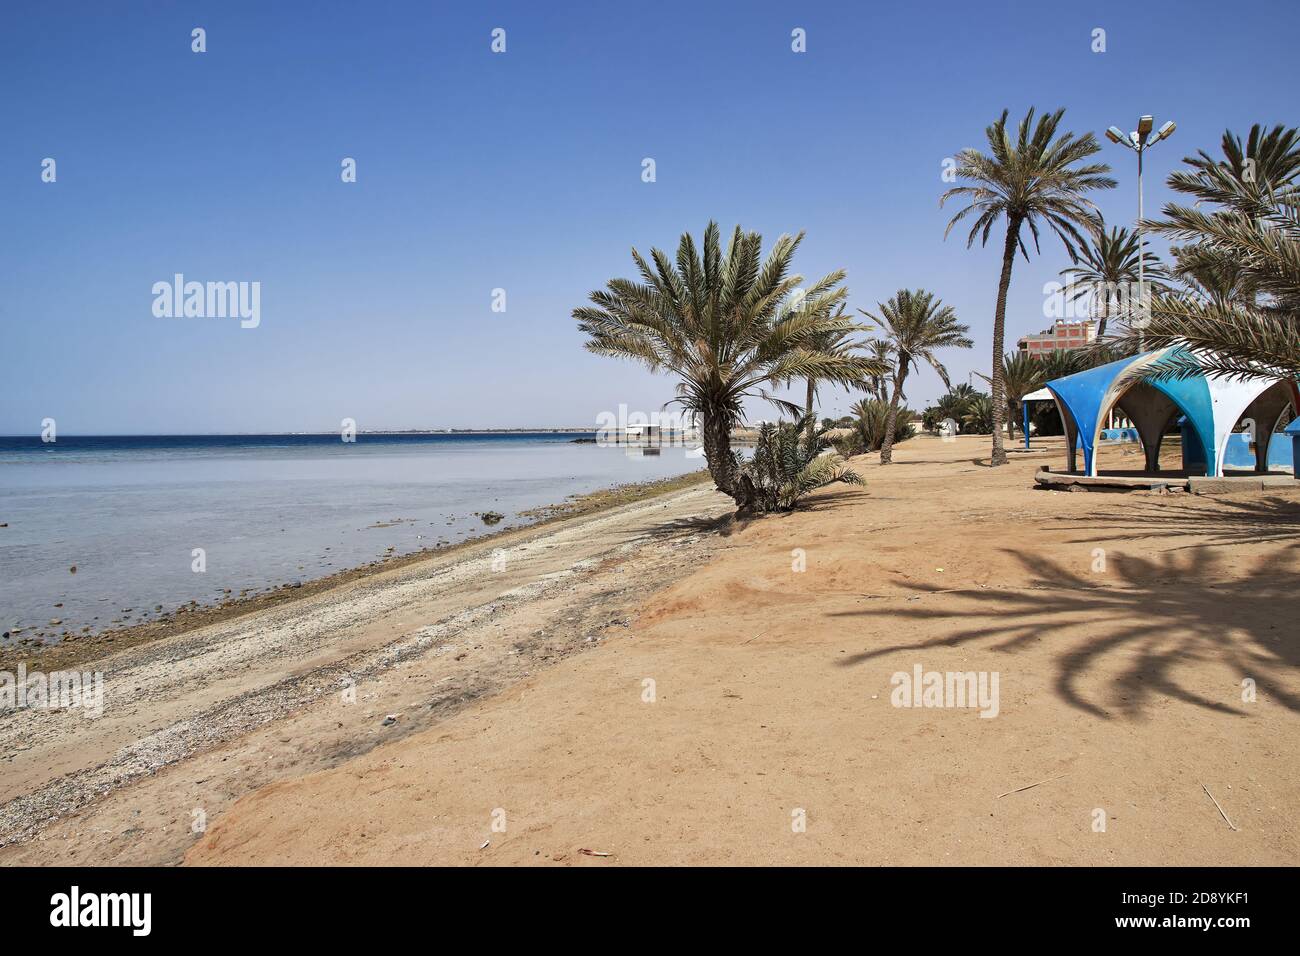 The beach of Red sea, Saudi arabia Stock Photo - Alamy